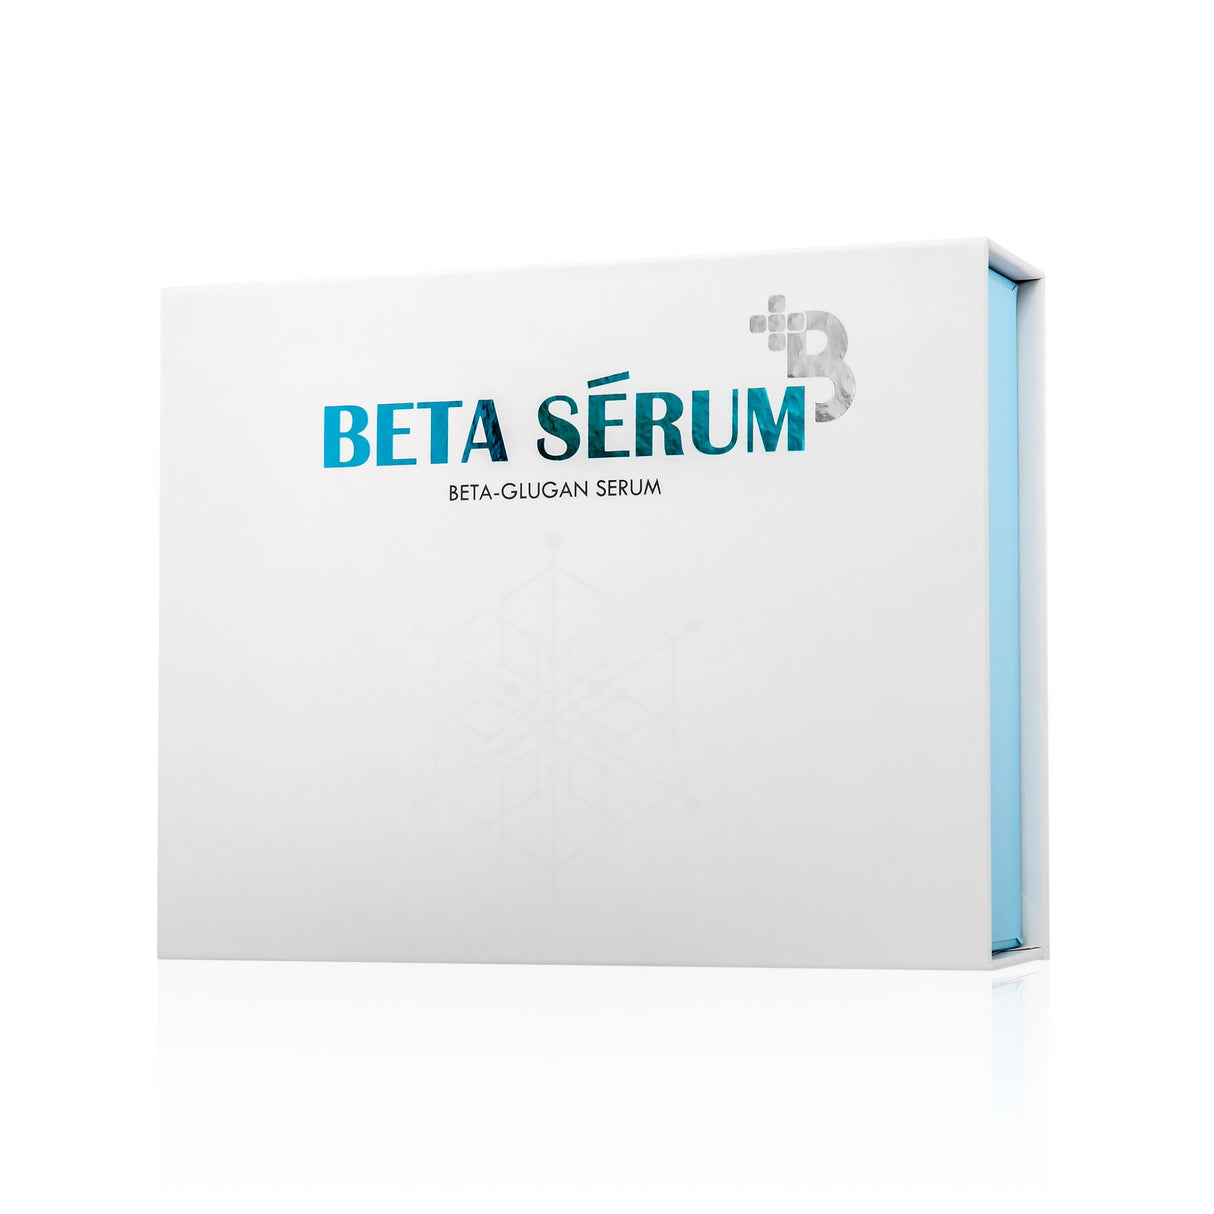 Beta Serum - Filler Lux™ - SKIN CARE - NeoGenesis Co., Ltd.